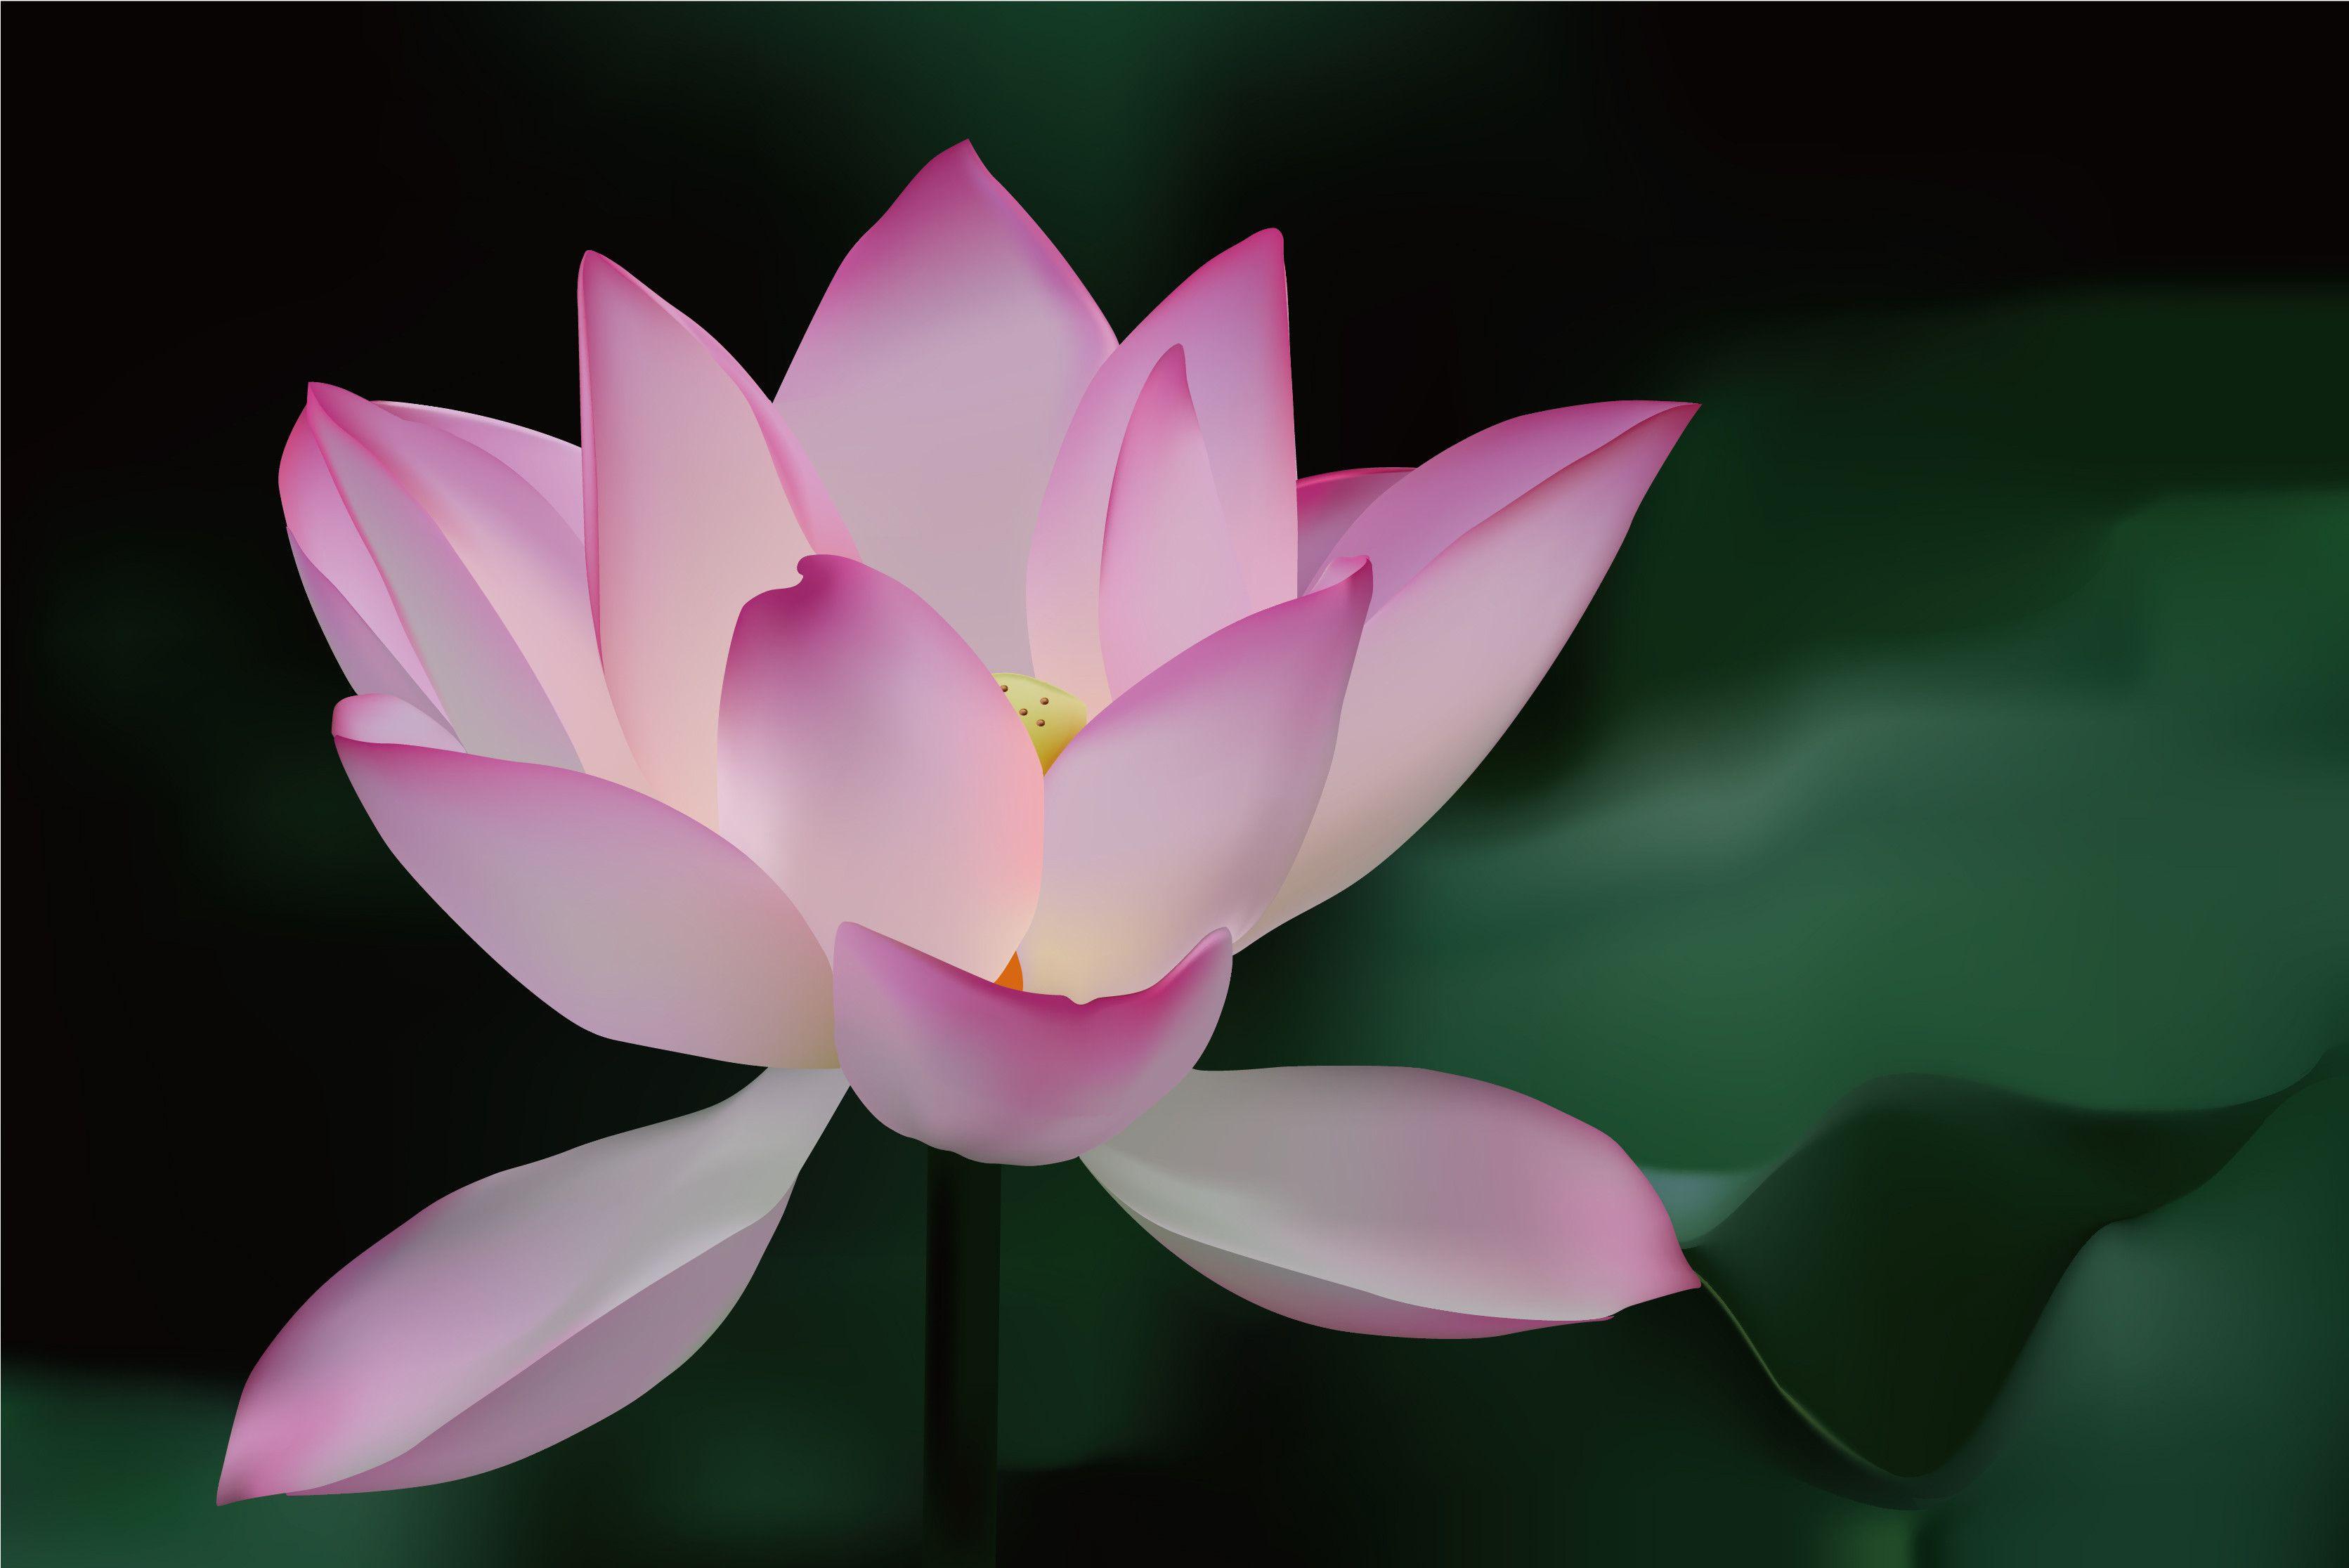 Lotus flower background vector. Download Free Vector